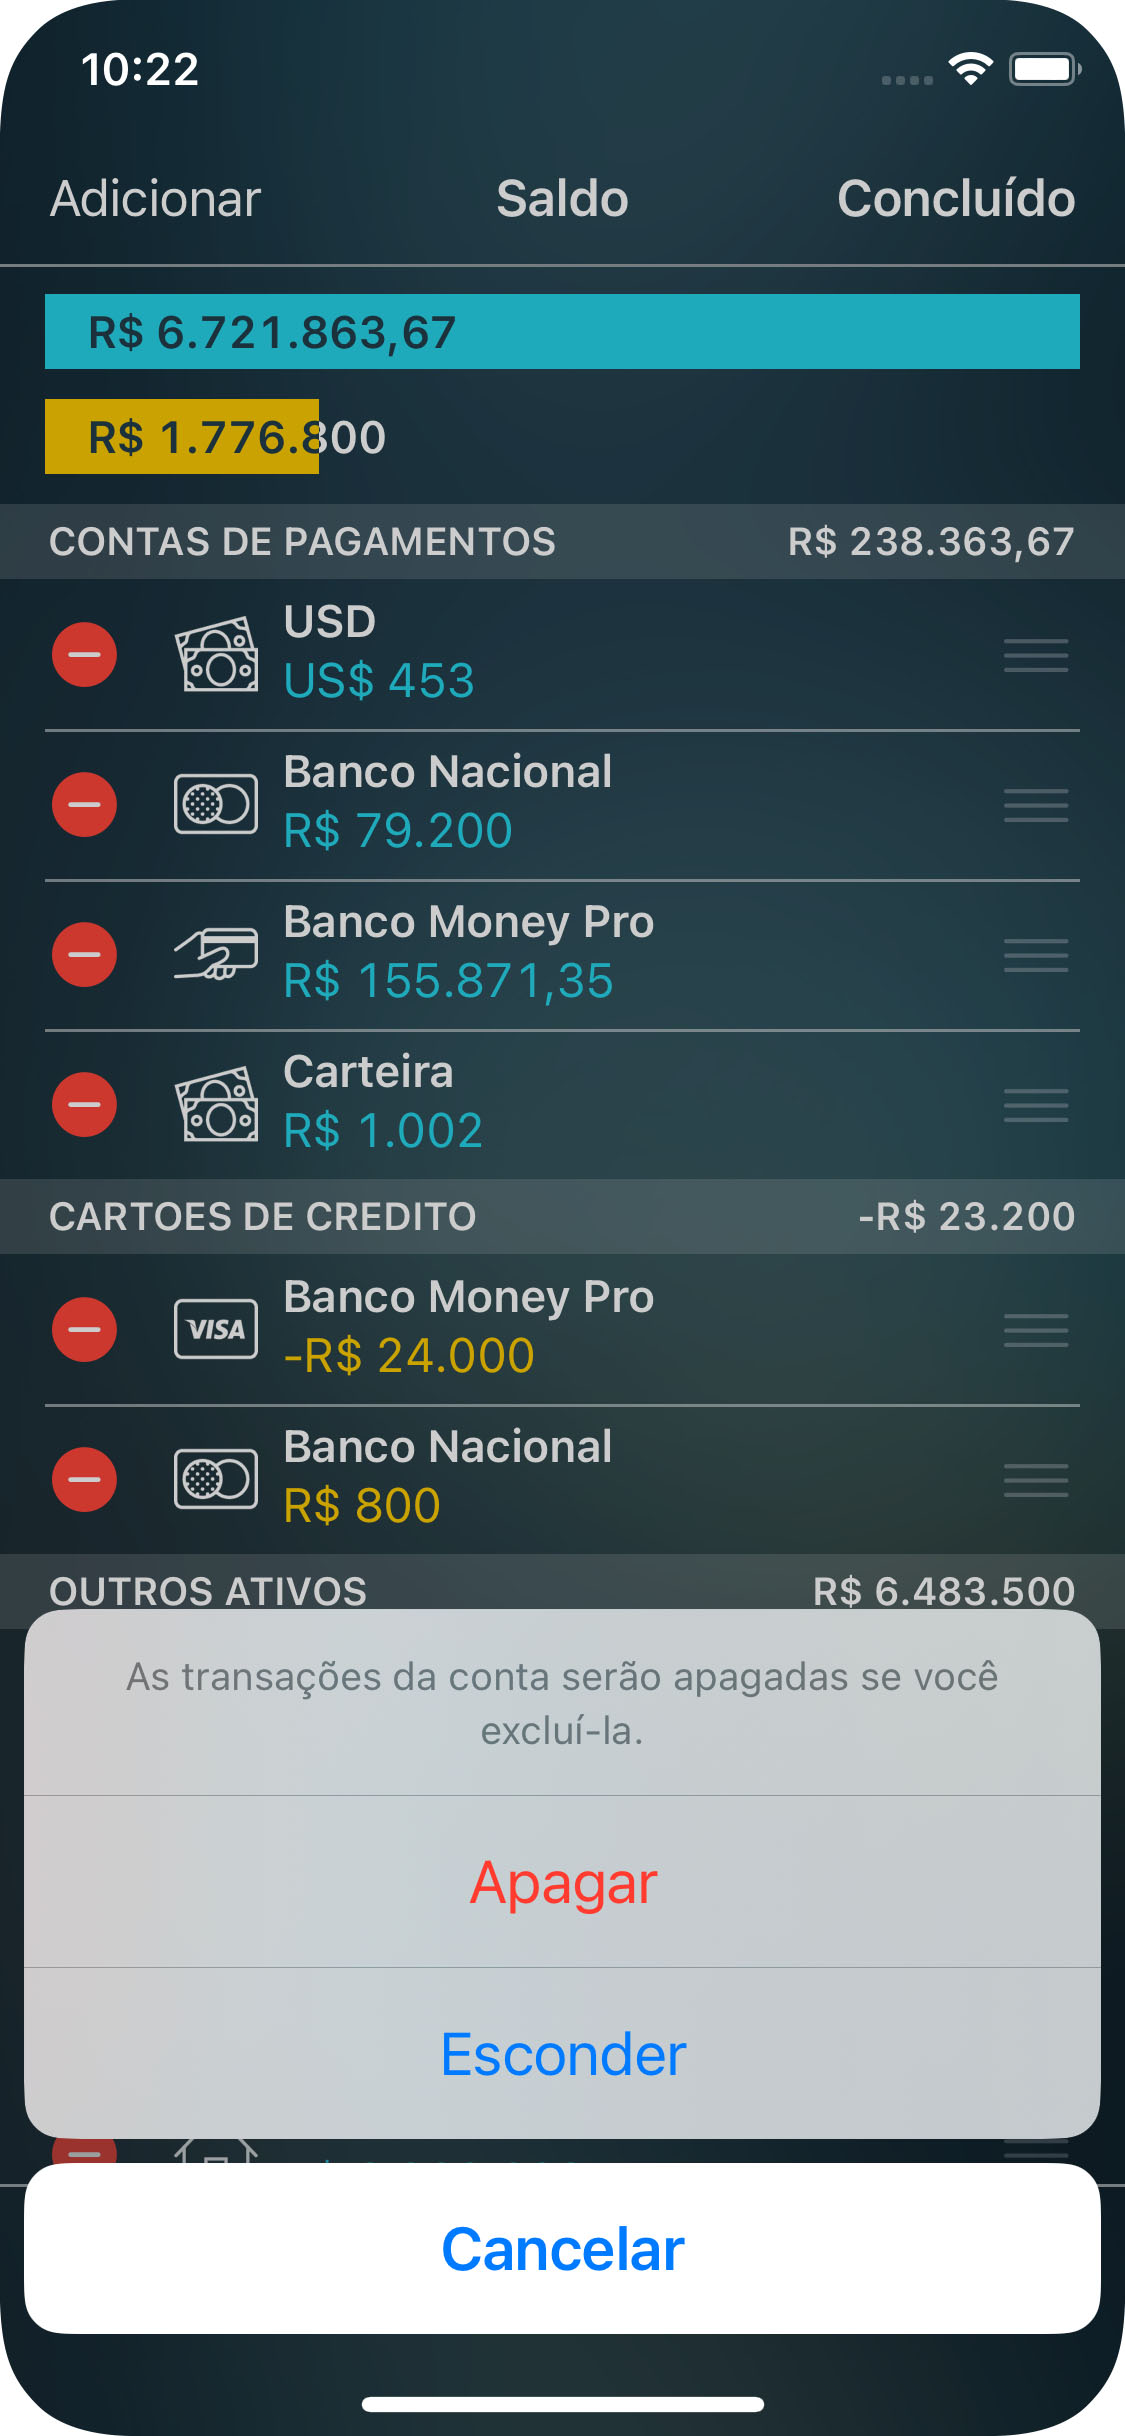 Money Pro - Como excluir uma conta - iPhone